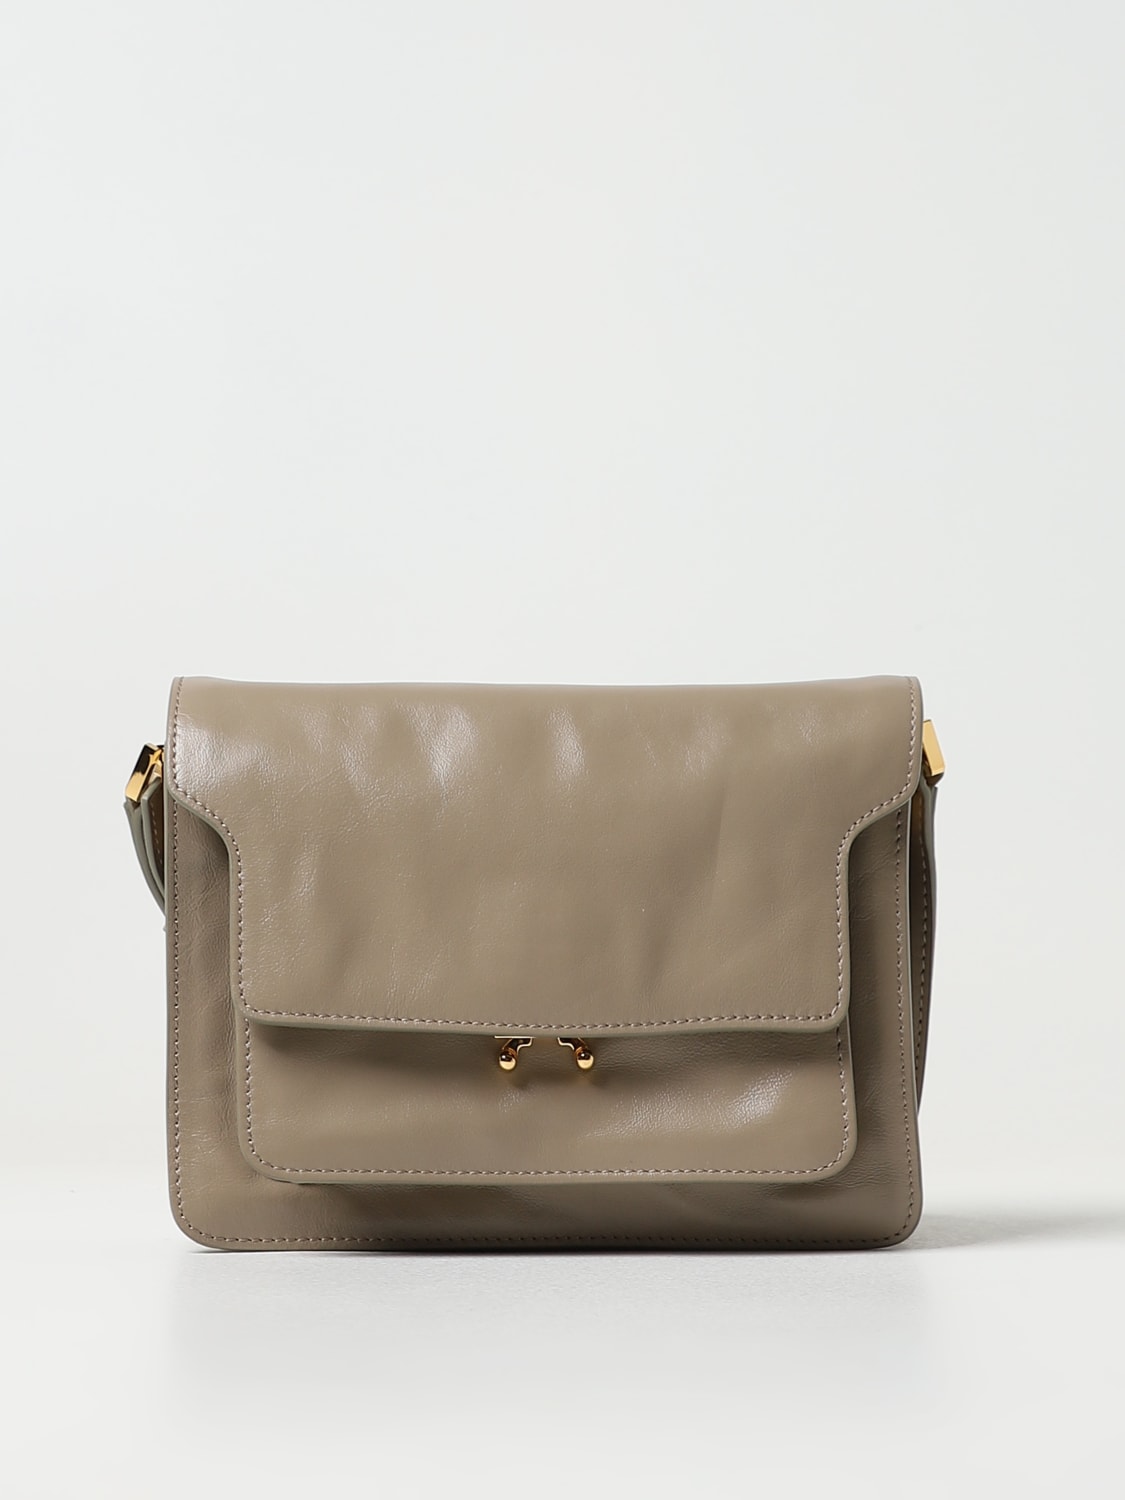 Marni Trunk Soft Bag in Tumbled Leather